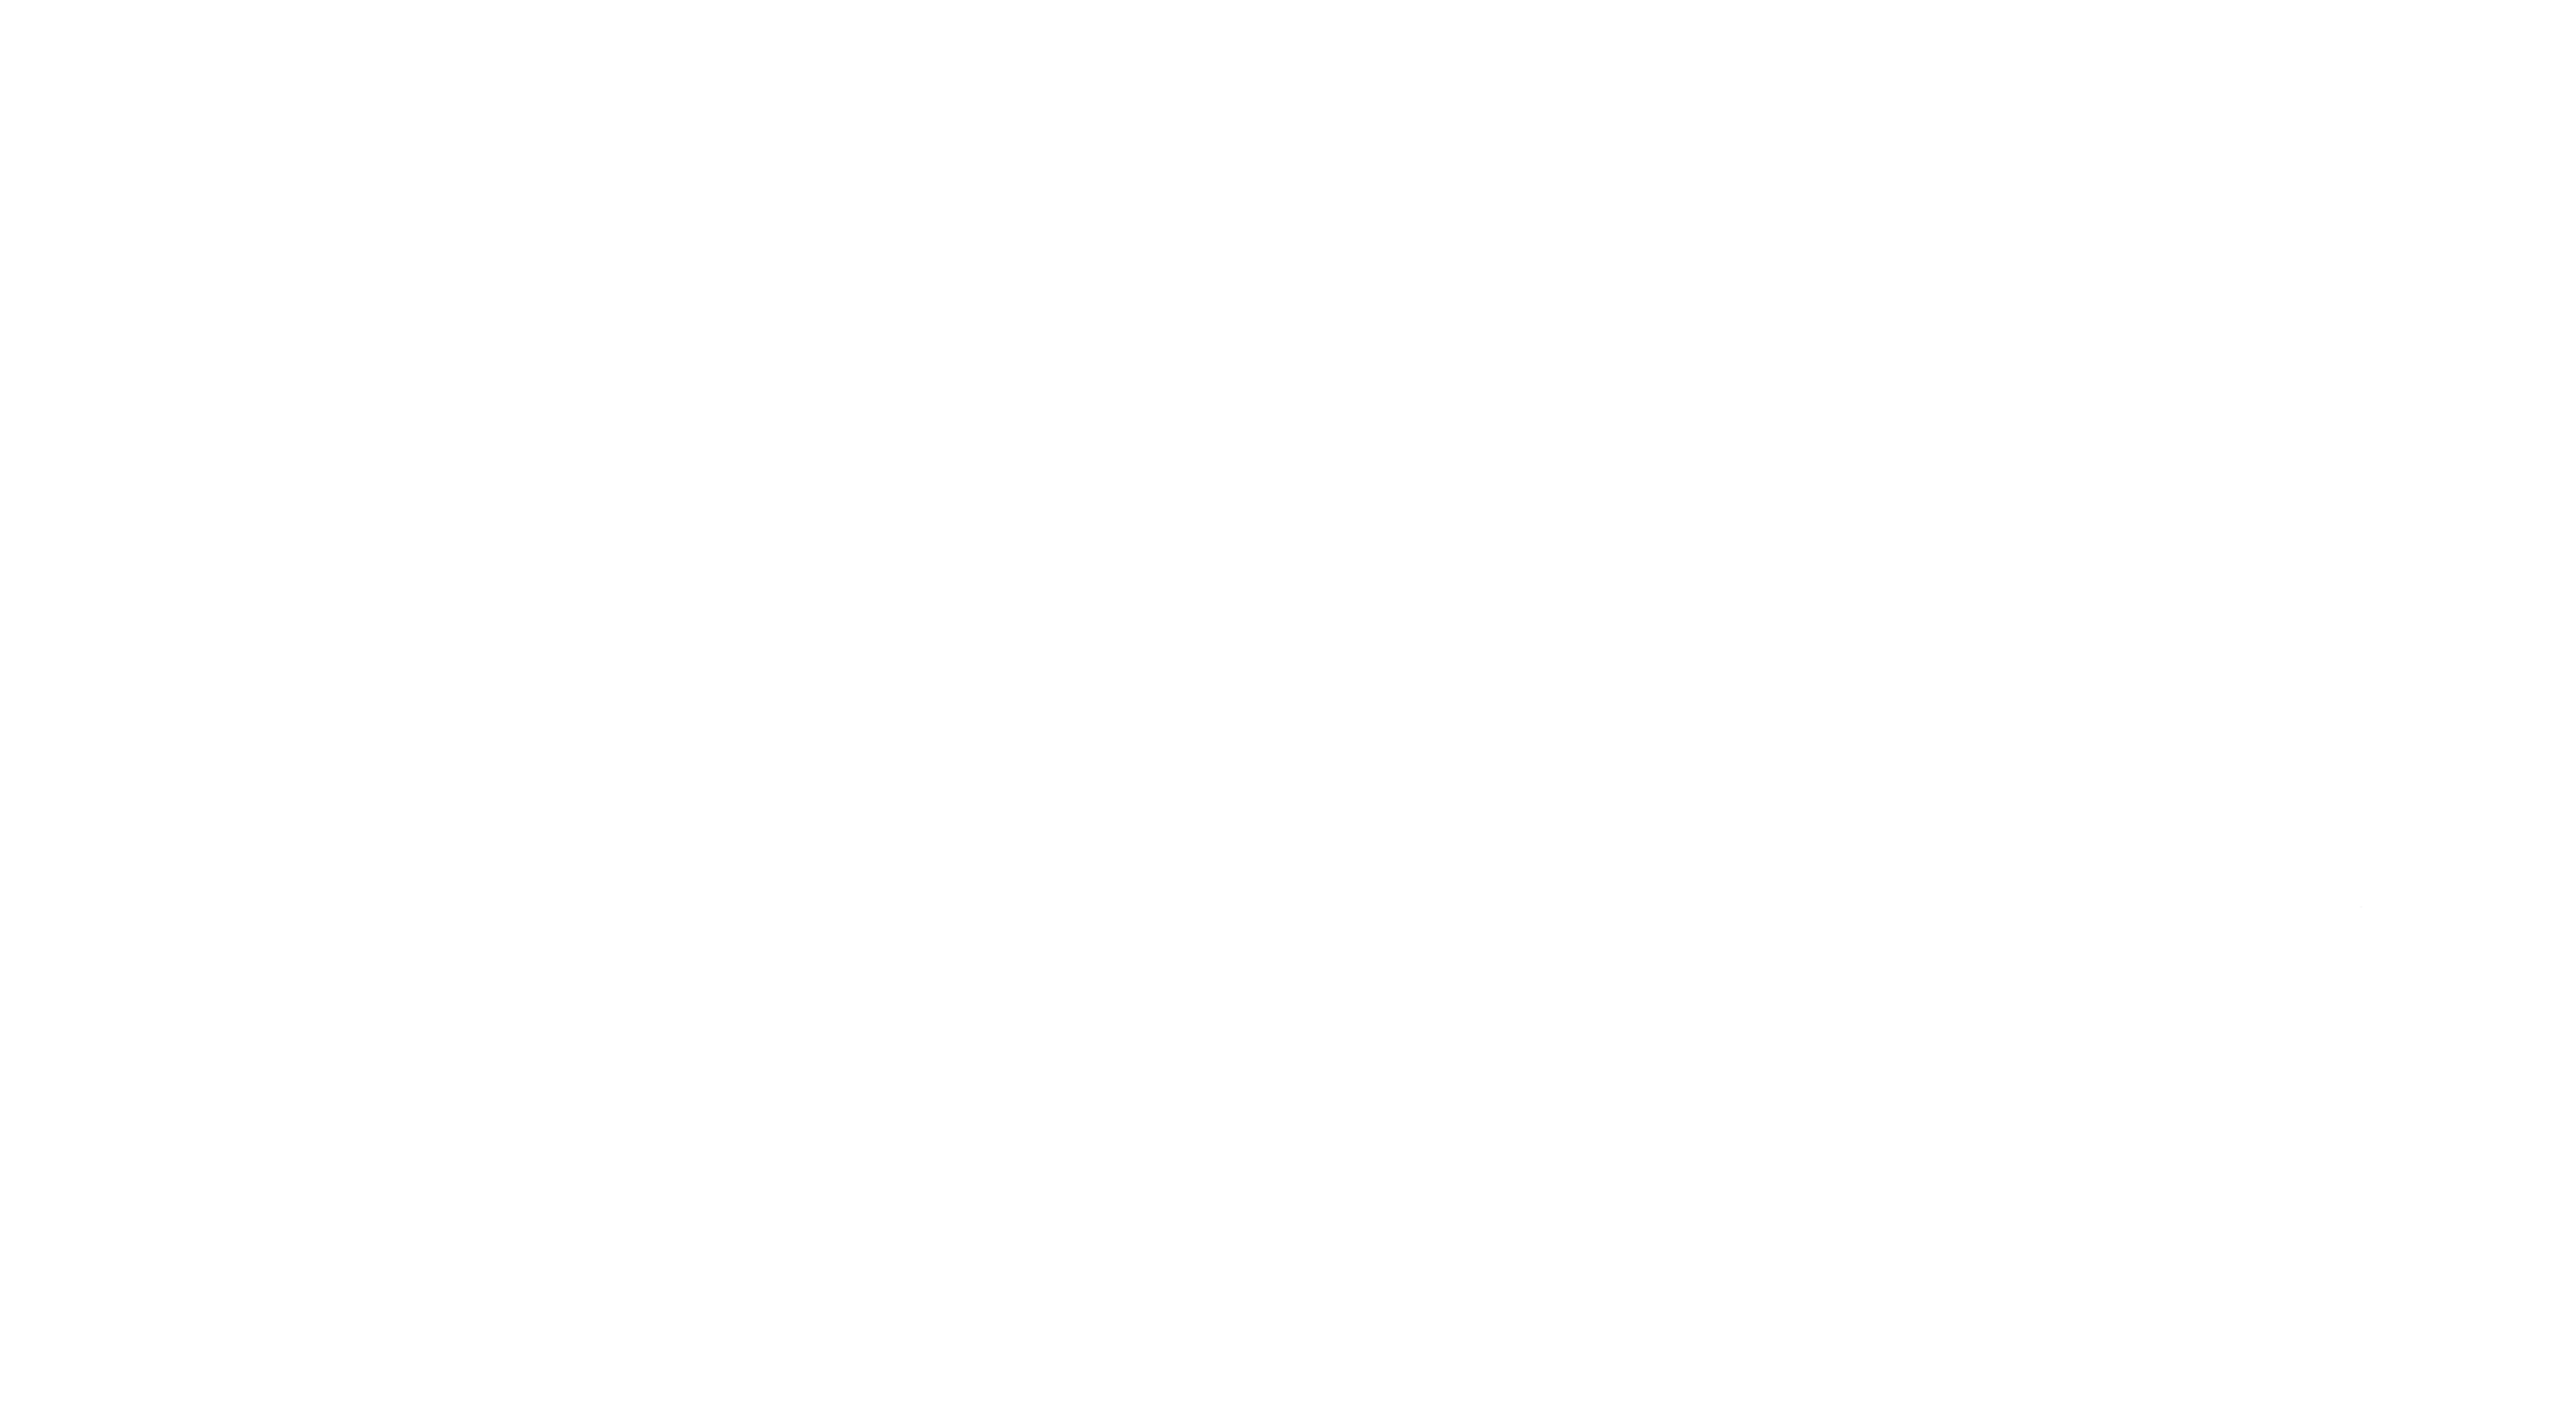 Middle Rogue Metropolitan Planning Organization